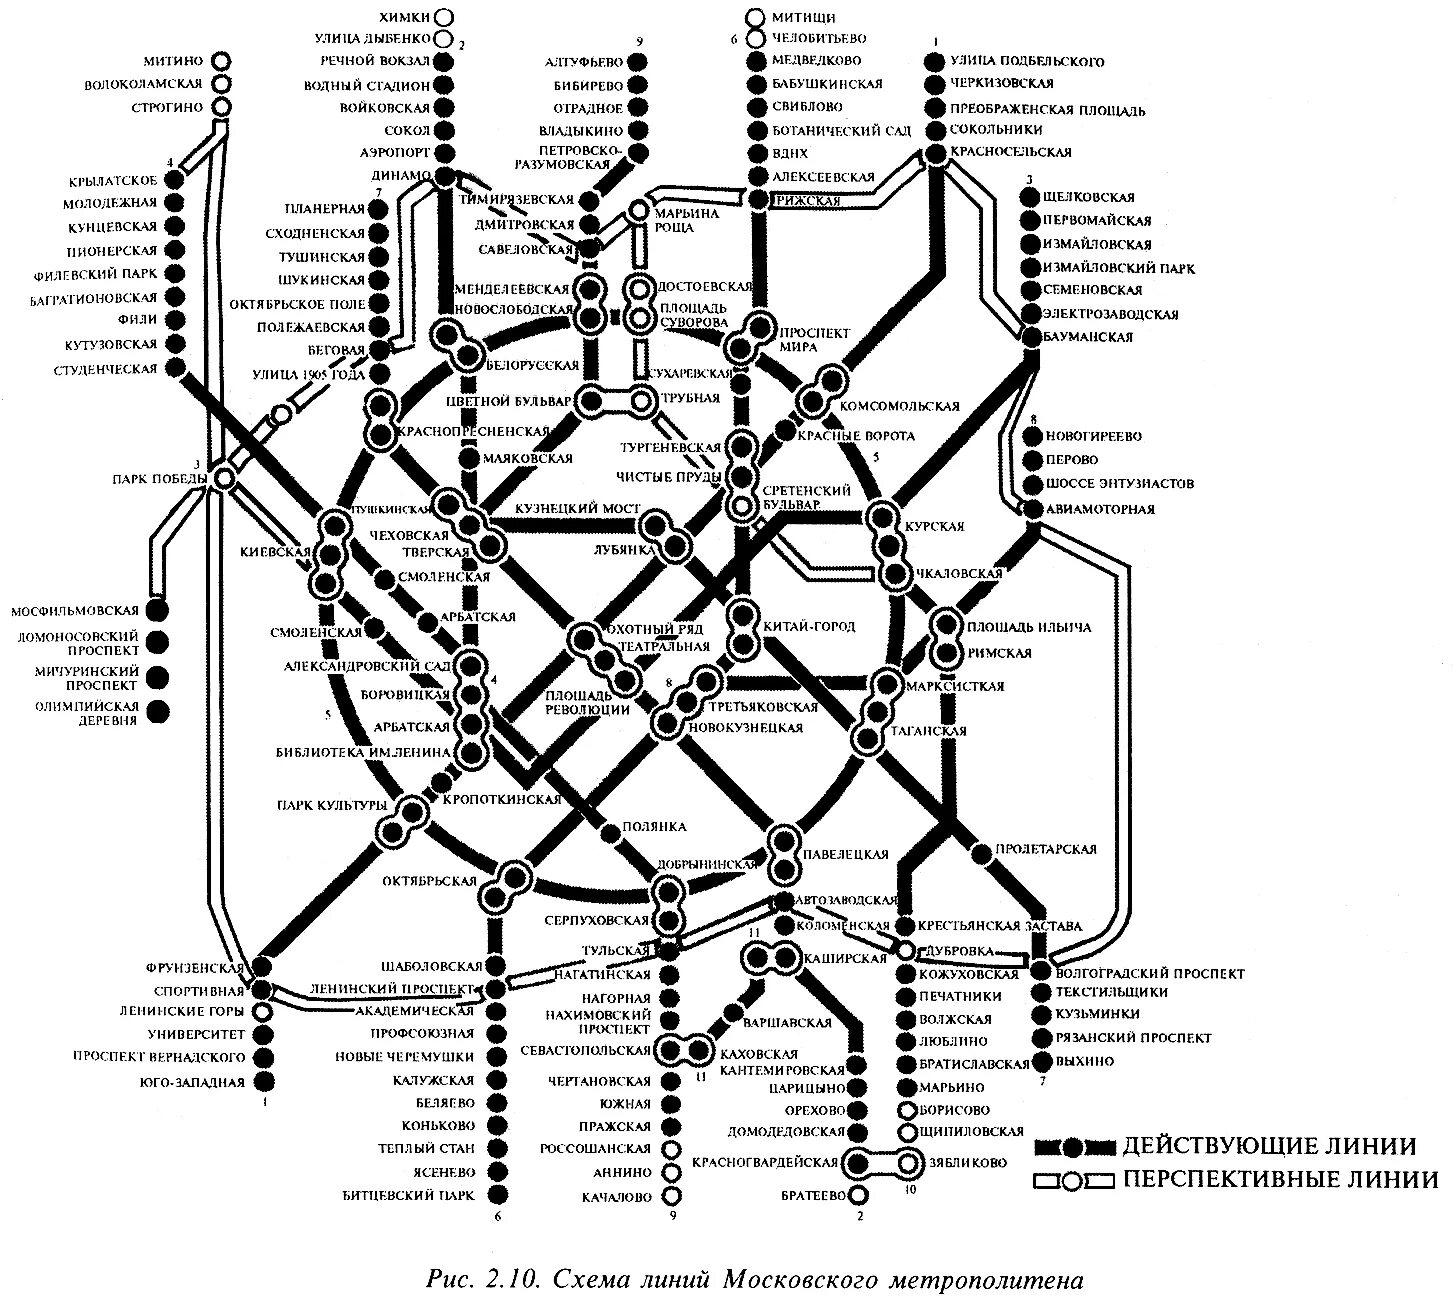 Схема московского метро